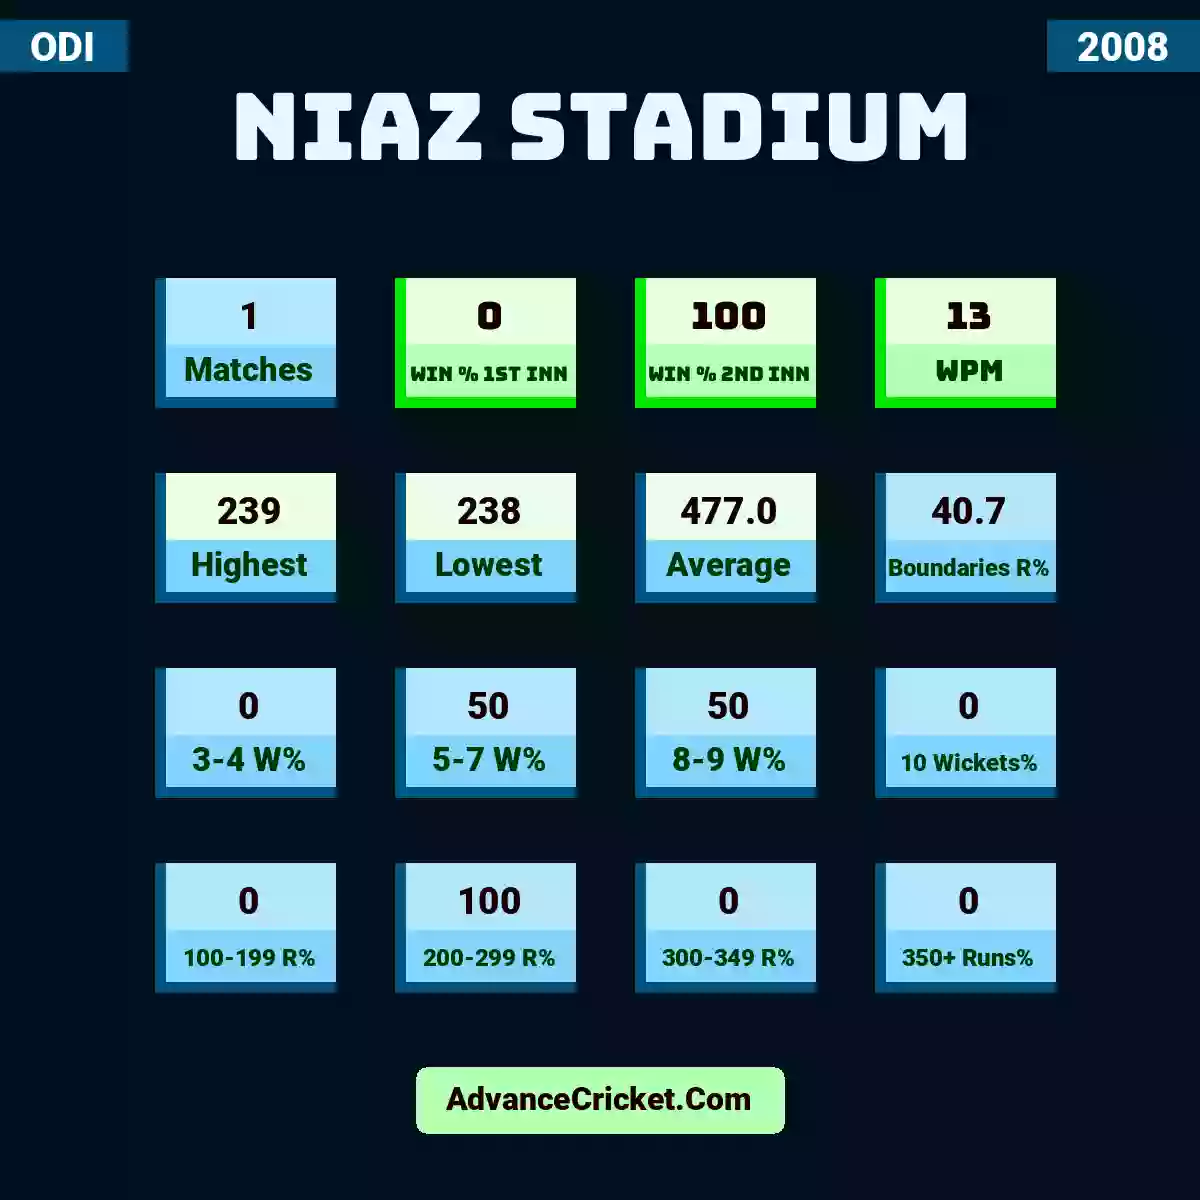 Image showing Niaz Stadium with Matches: 1, Win % 1st Inn: 0, Win % 2nd Inn: 100, WPM: 13, Highest: 239, Lowest: 238, Average: 477.0, Boundaries R%: 40.7, 3-4 W%: 0, 5-7 W%: 50, 8-9 W%: 50, 10 Wickets%: 0, 100-199 R%: 0, 200-299 R%: 100, 300-349 R%: 0, 350+ Runs%: 0.